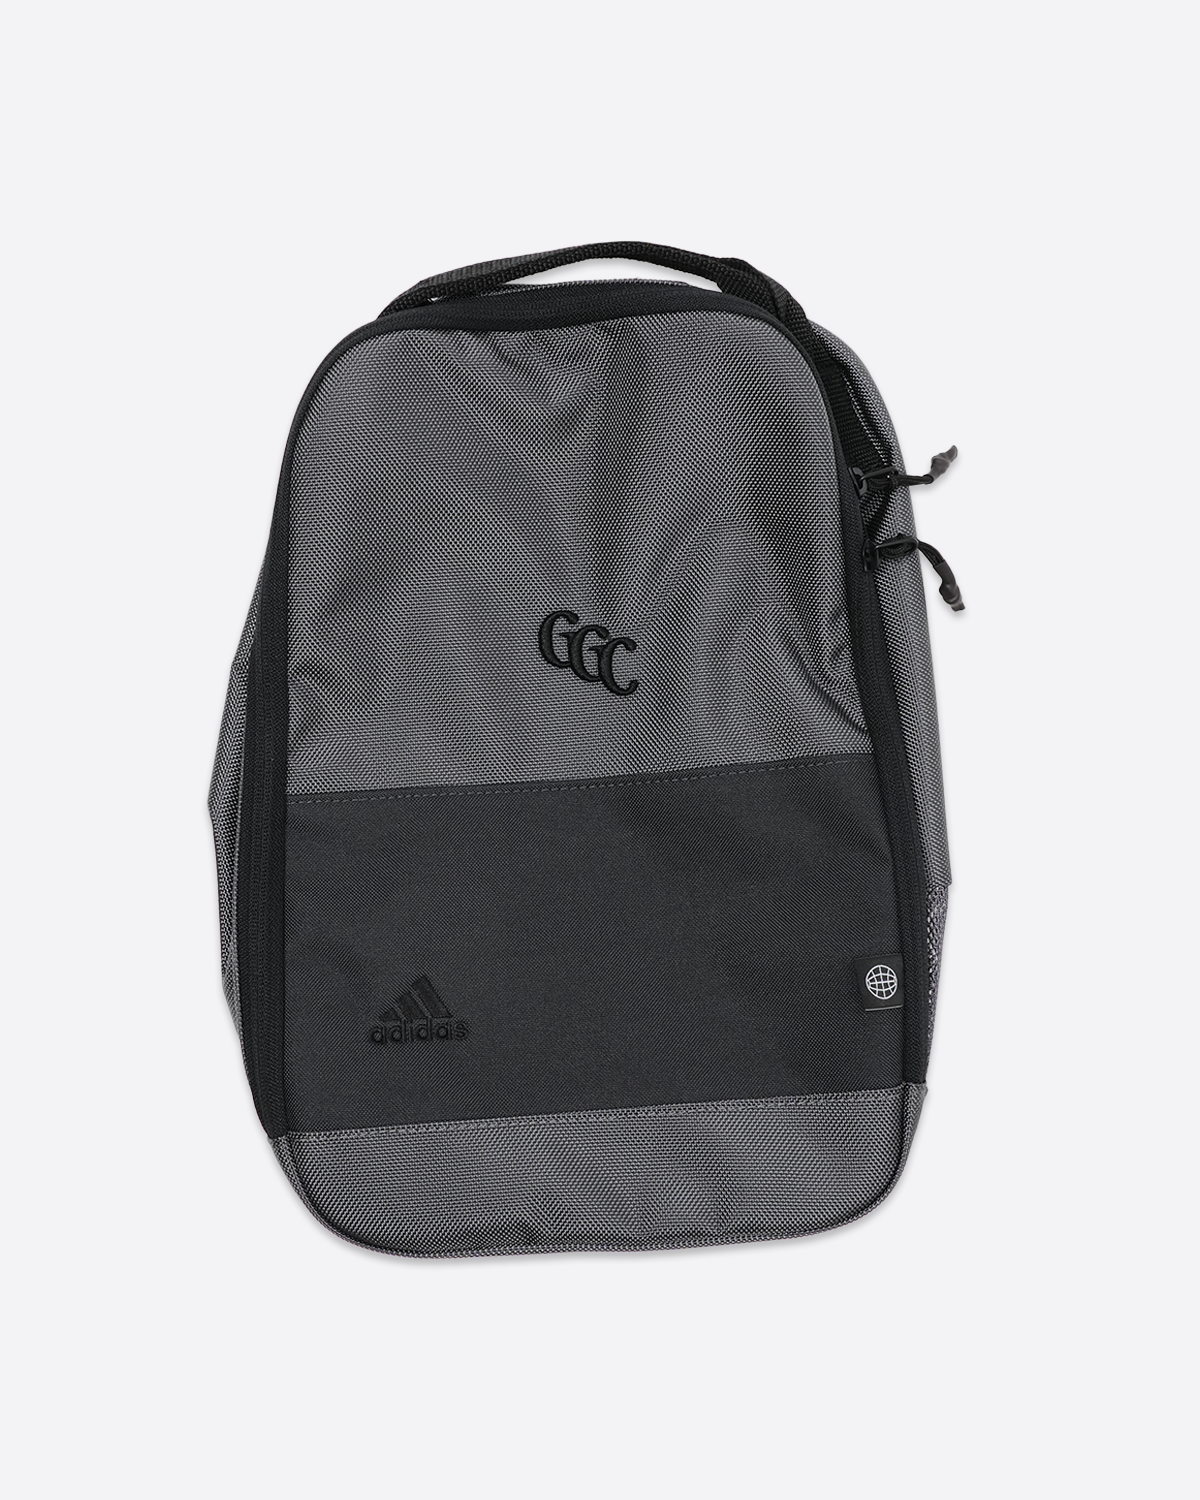 GGC - Adi Shoe Bag - Black - OS